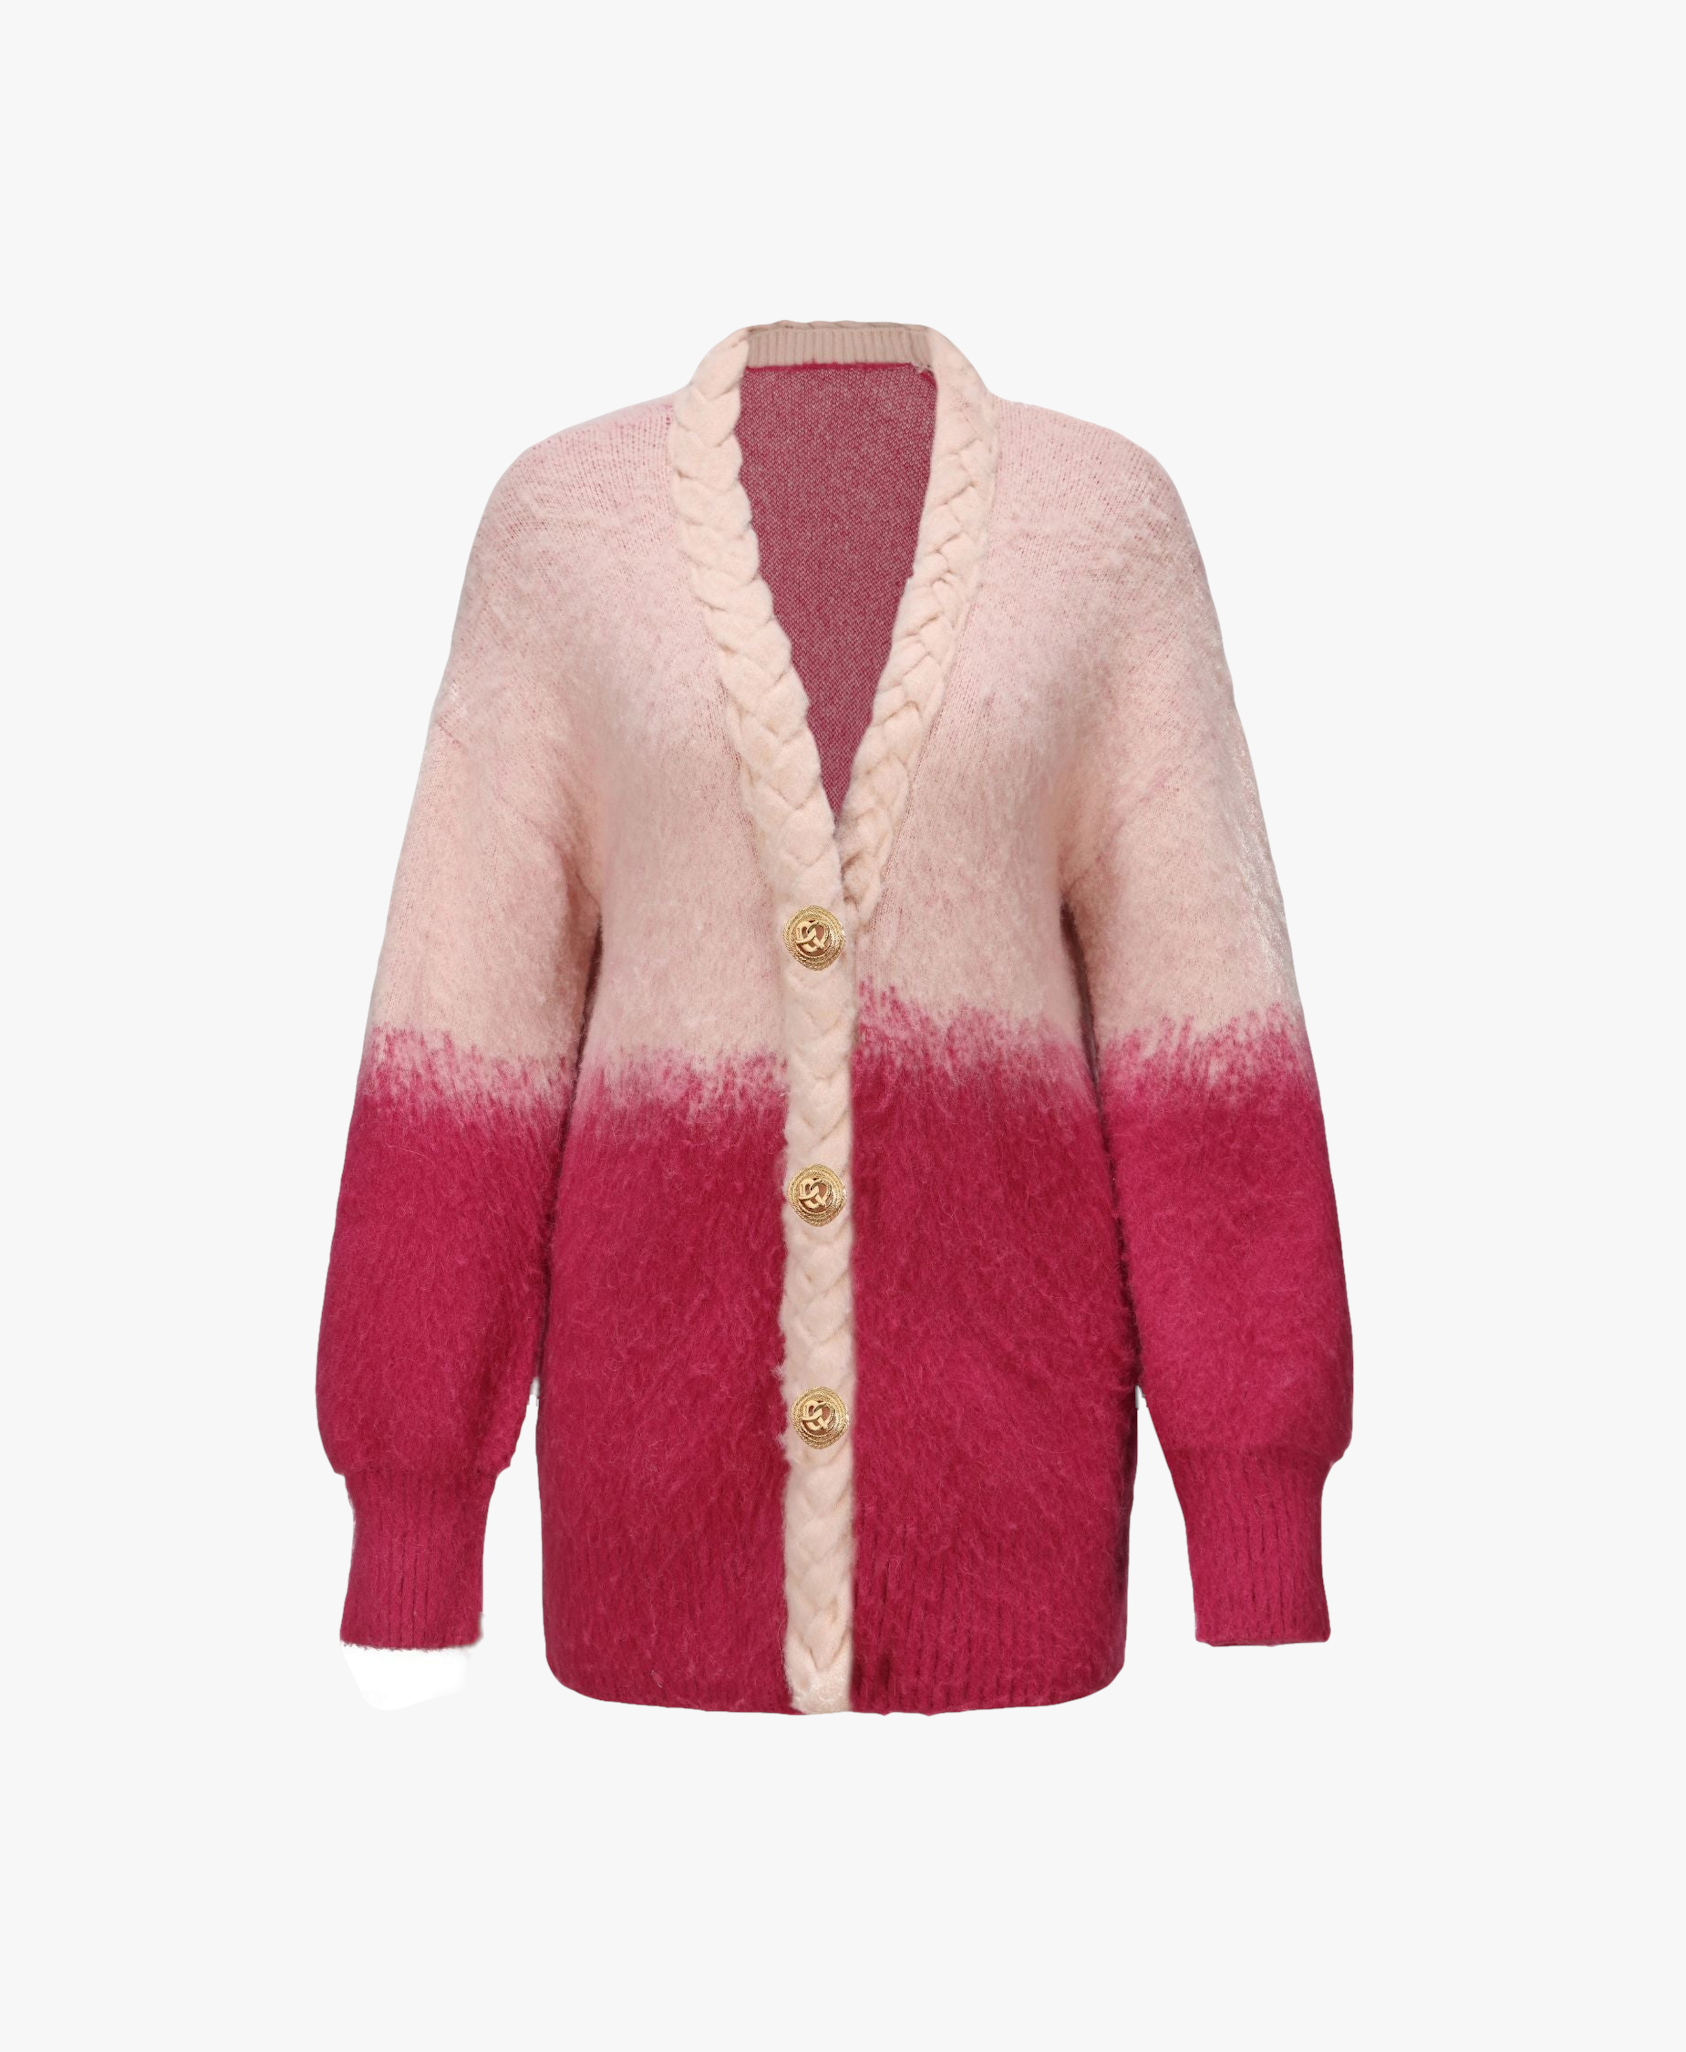 Daphne Diamond Knit Crop Cardigan (Pink) image #5